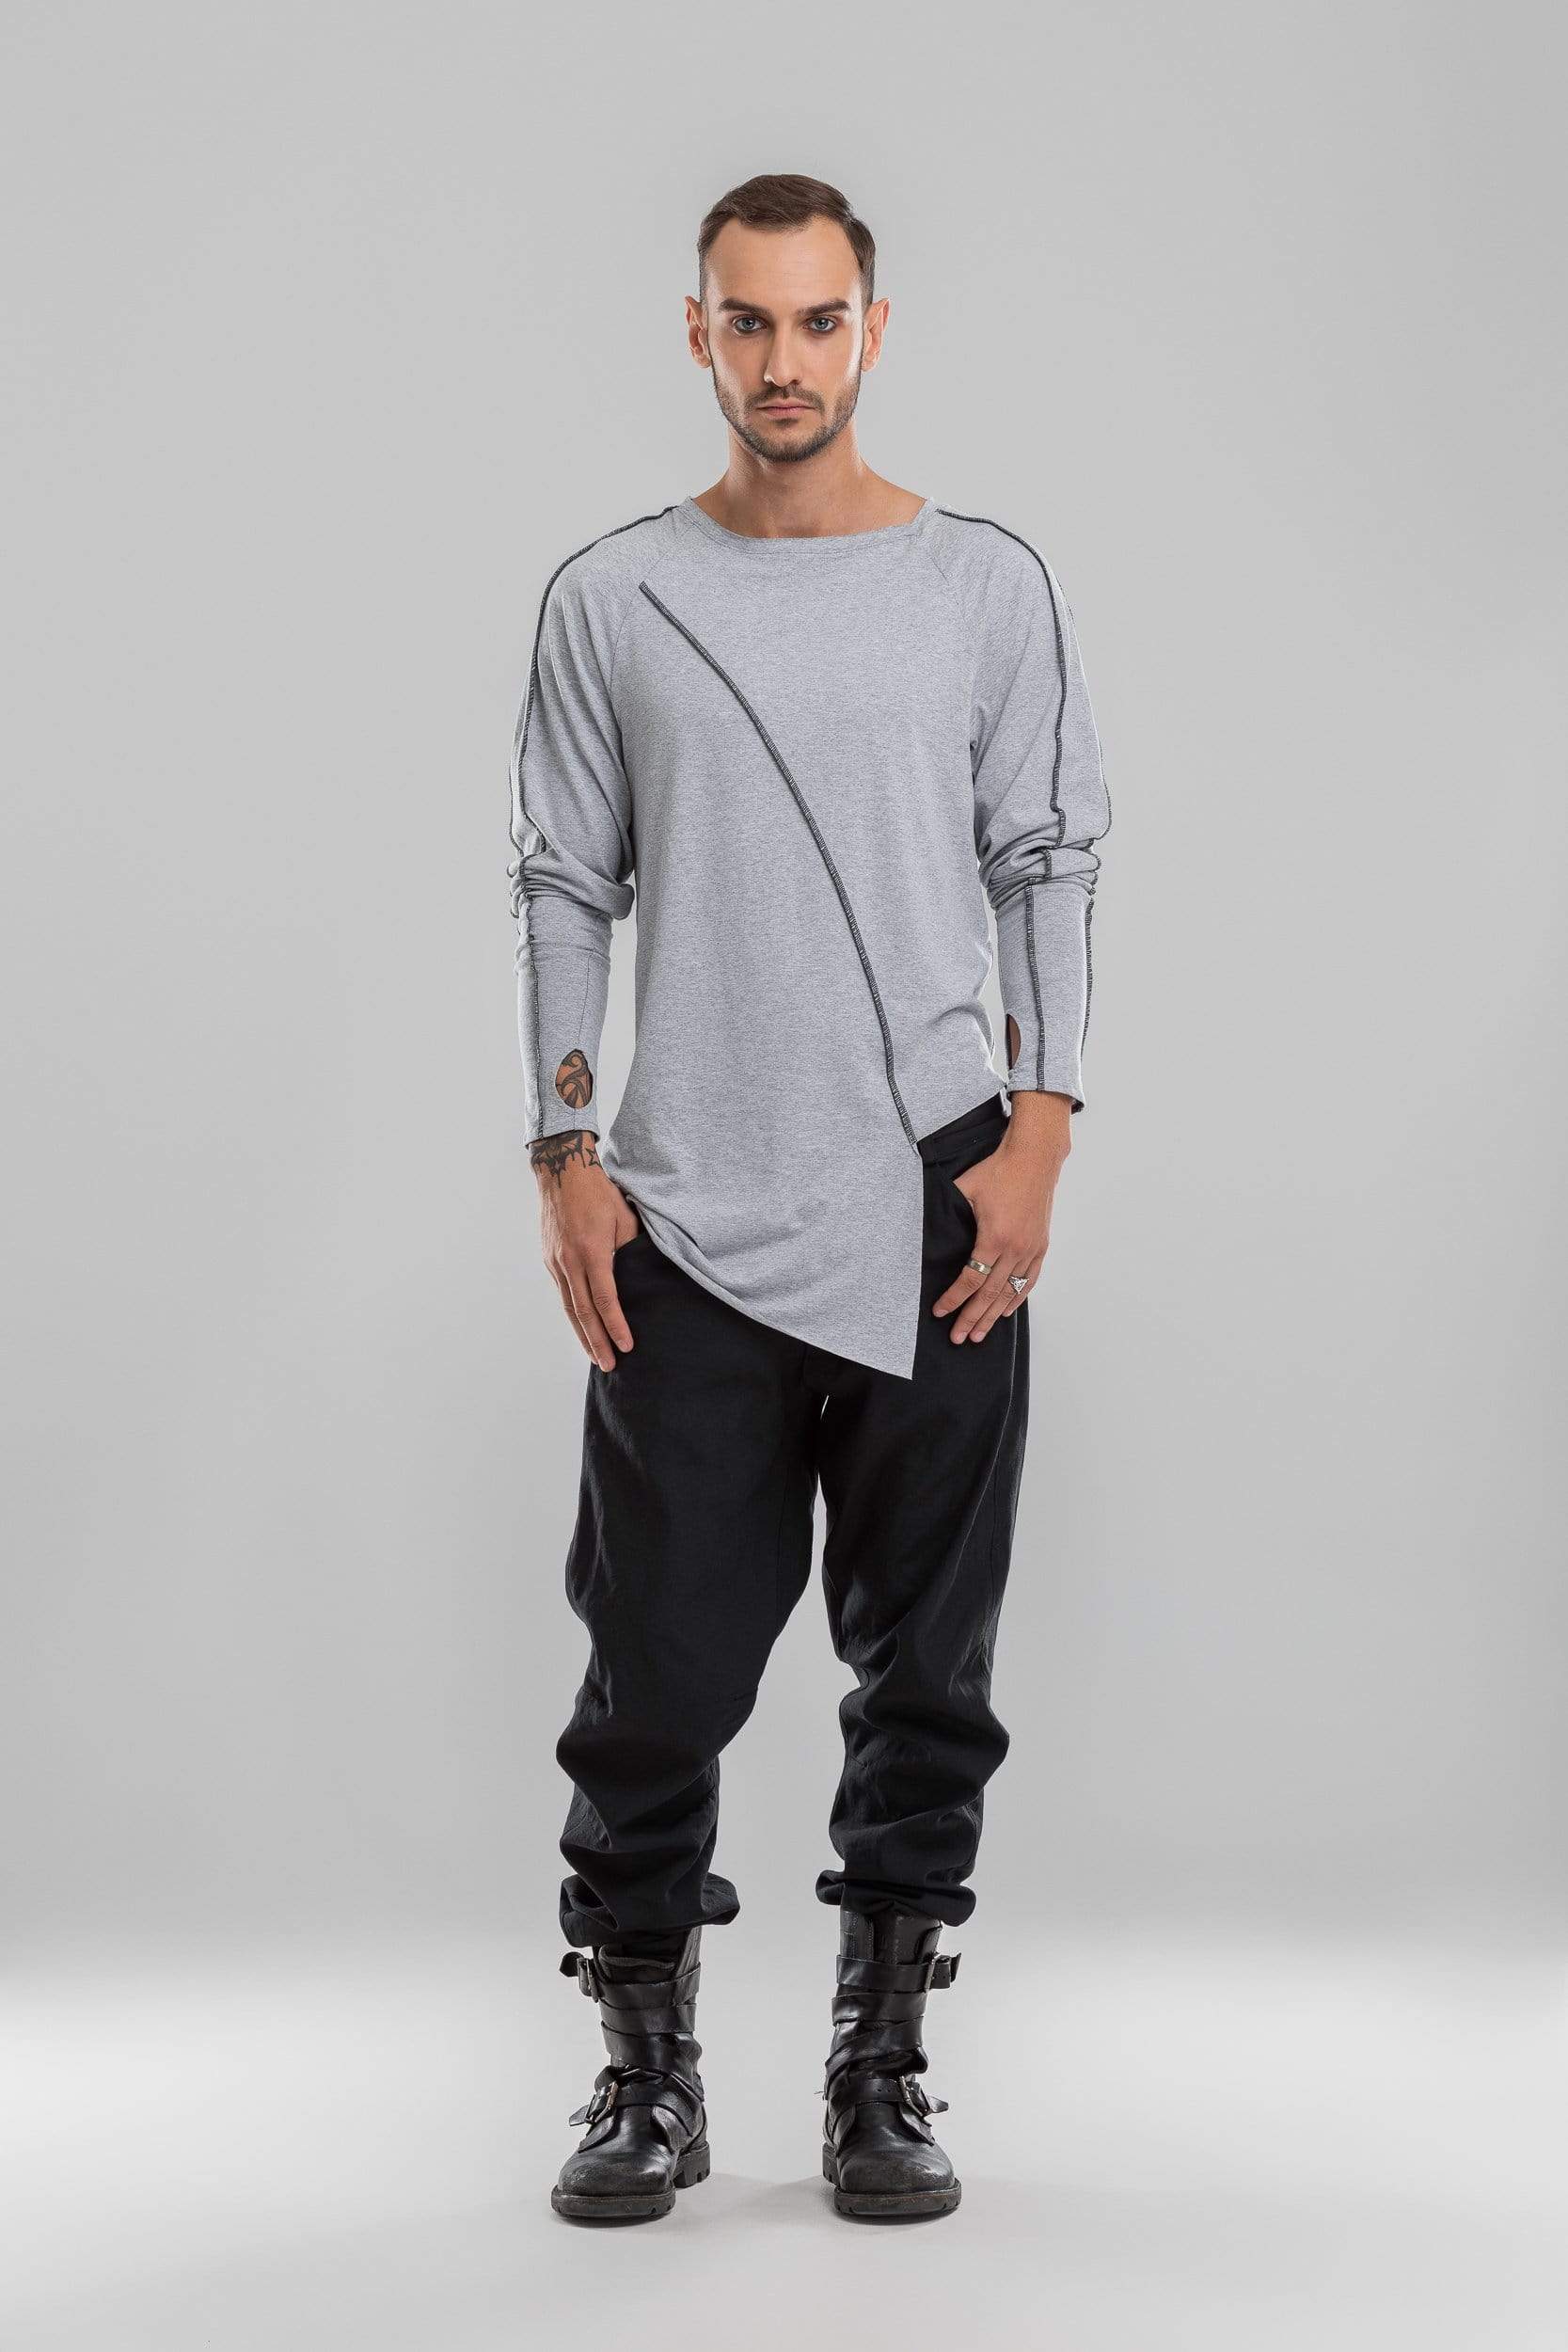 MDNT45 Tops & T-shirts Grey asymmetric jumper